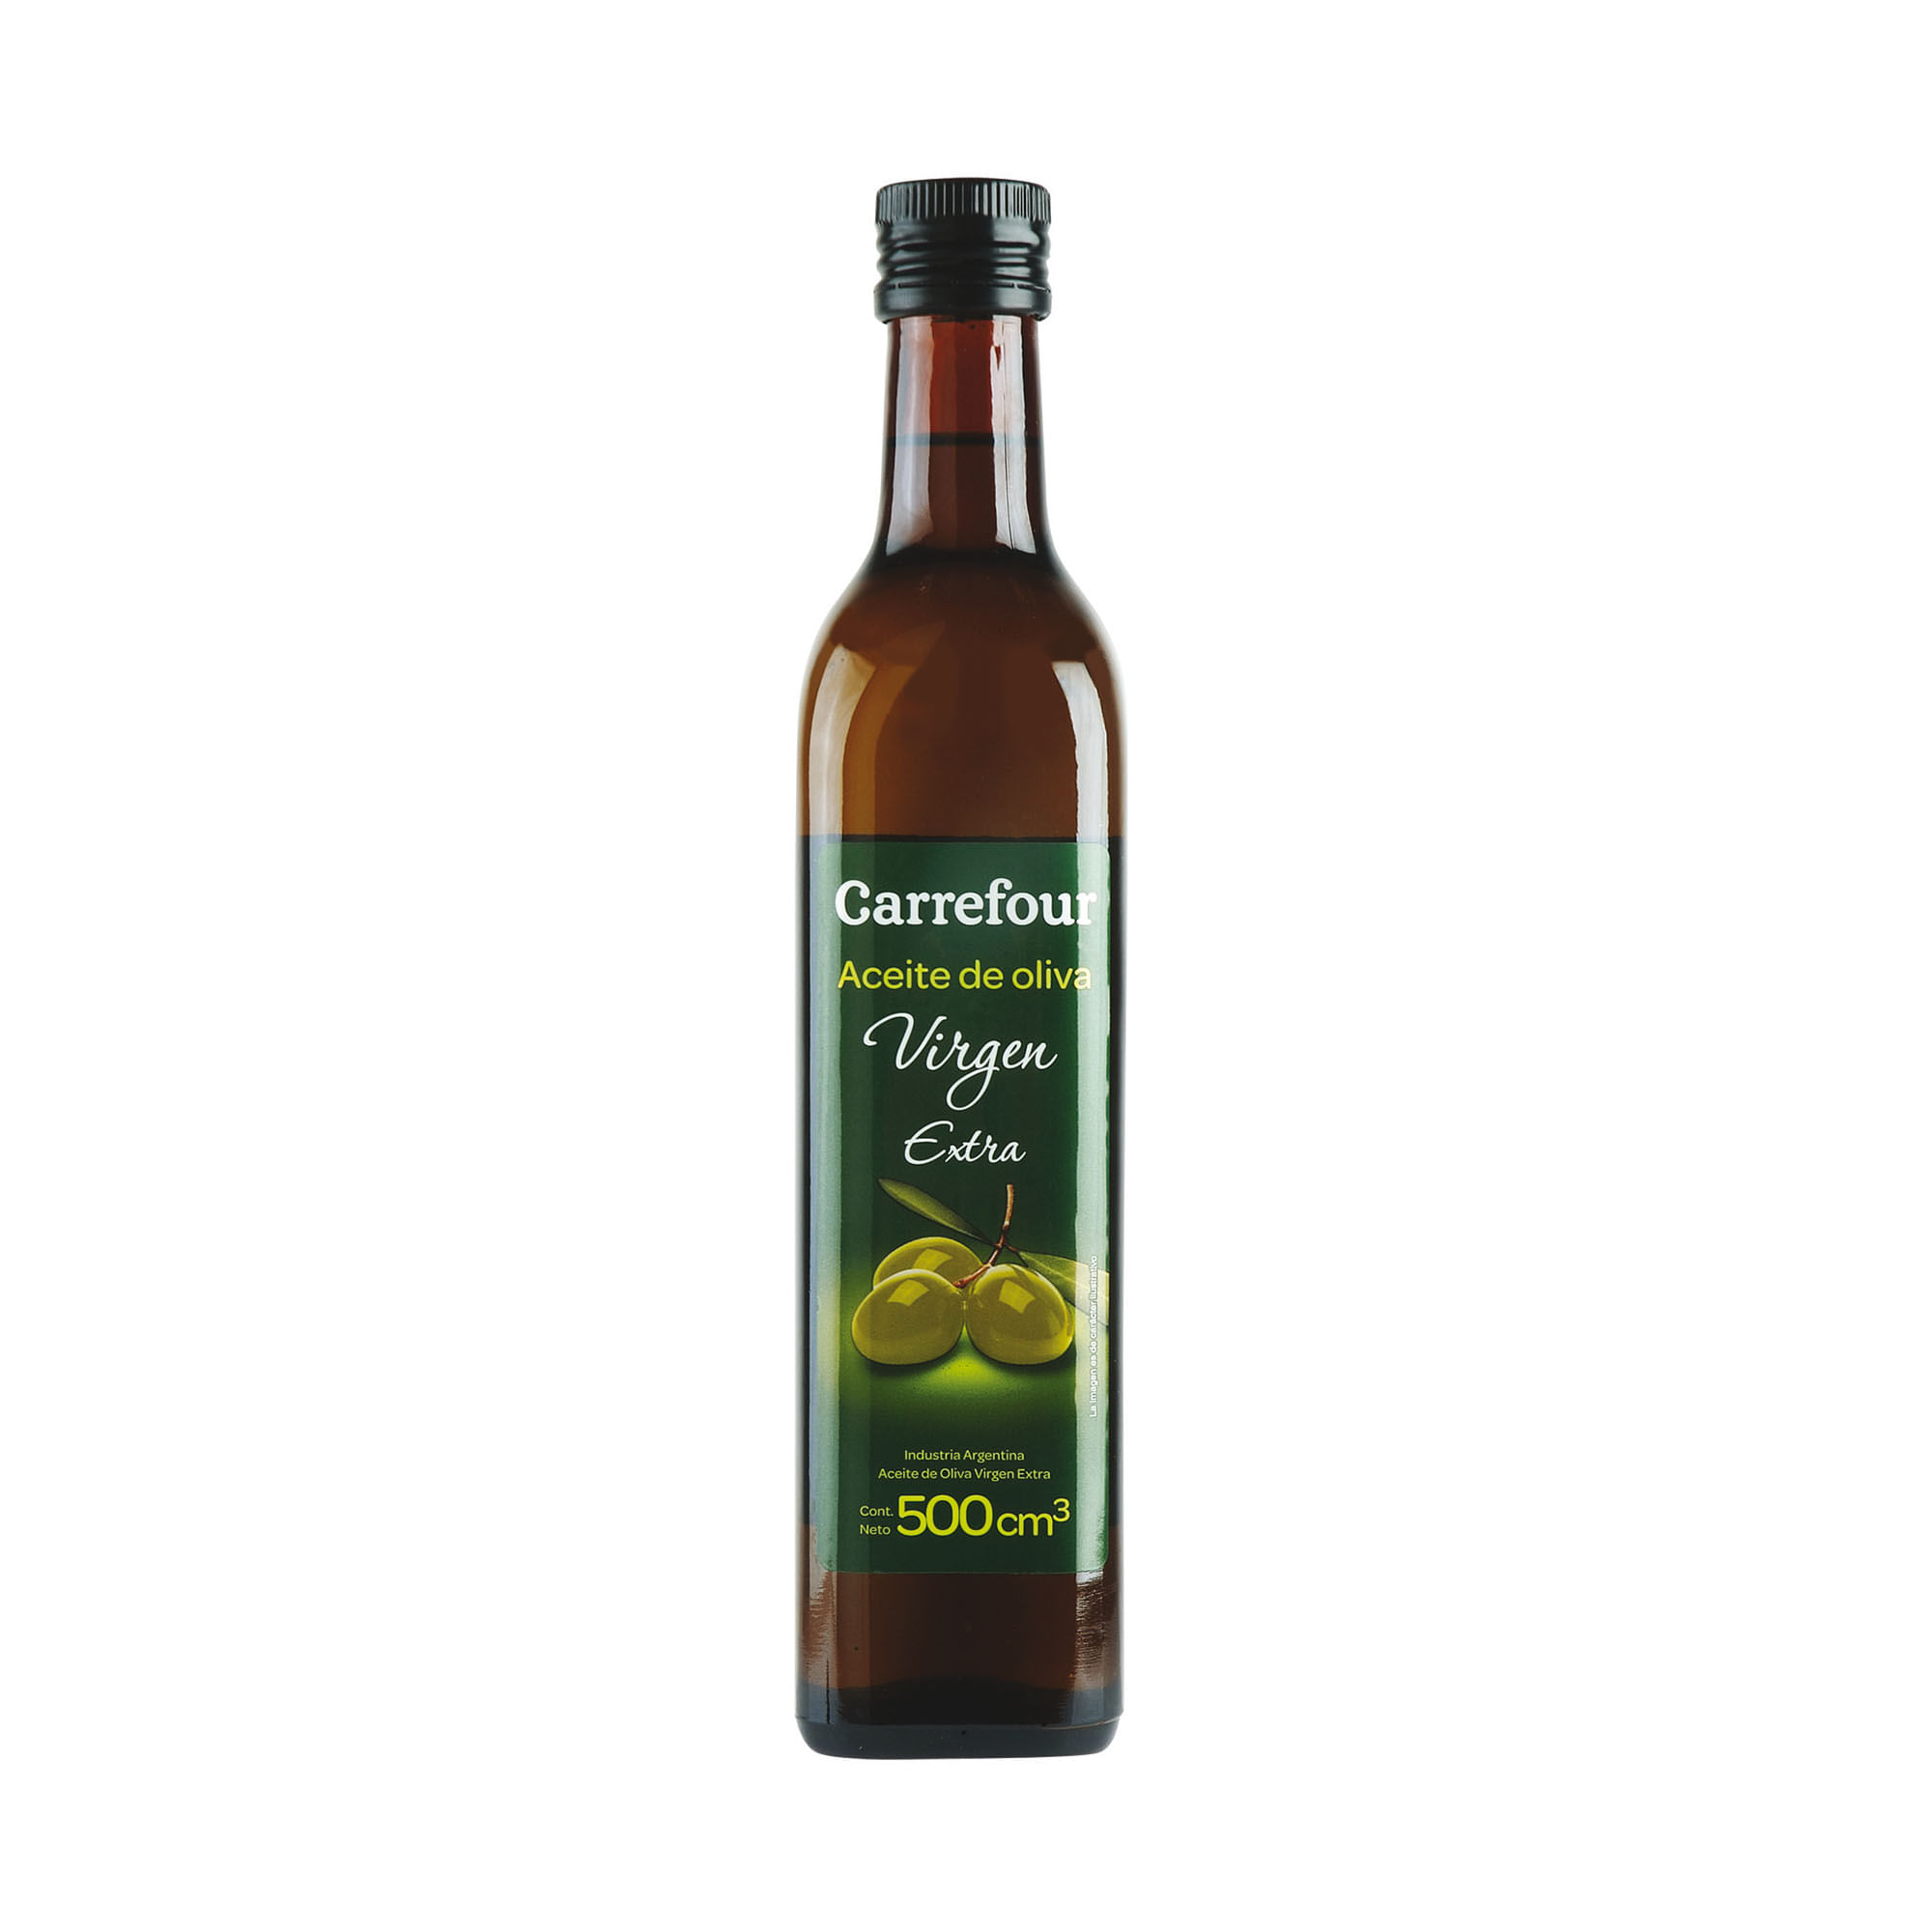 Aceite de oliva extra virgen Cocinero intenso 500 cc. - Carrefour